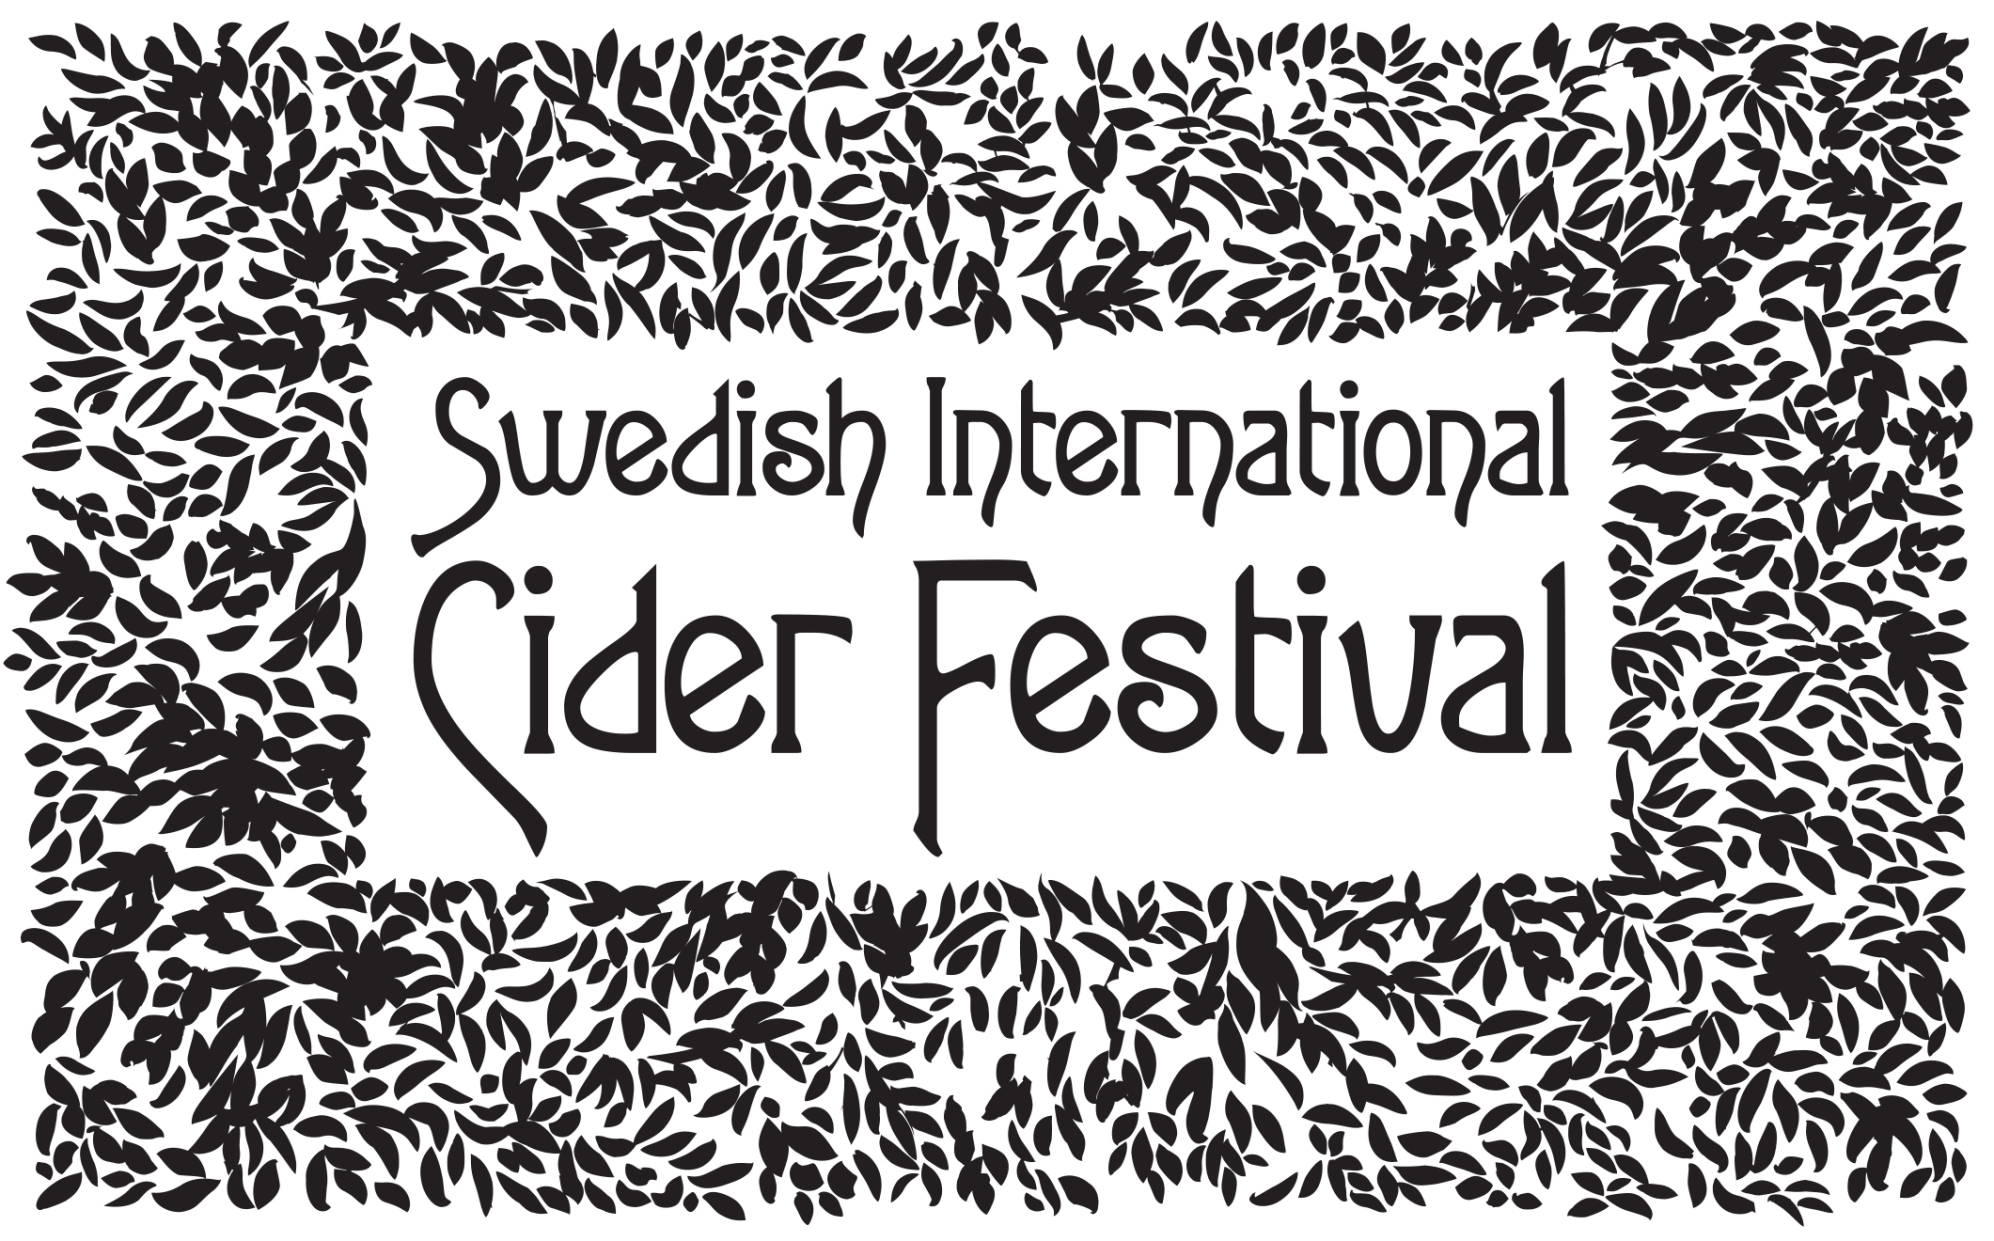 Swedish International Cider Festival